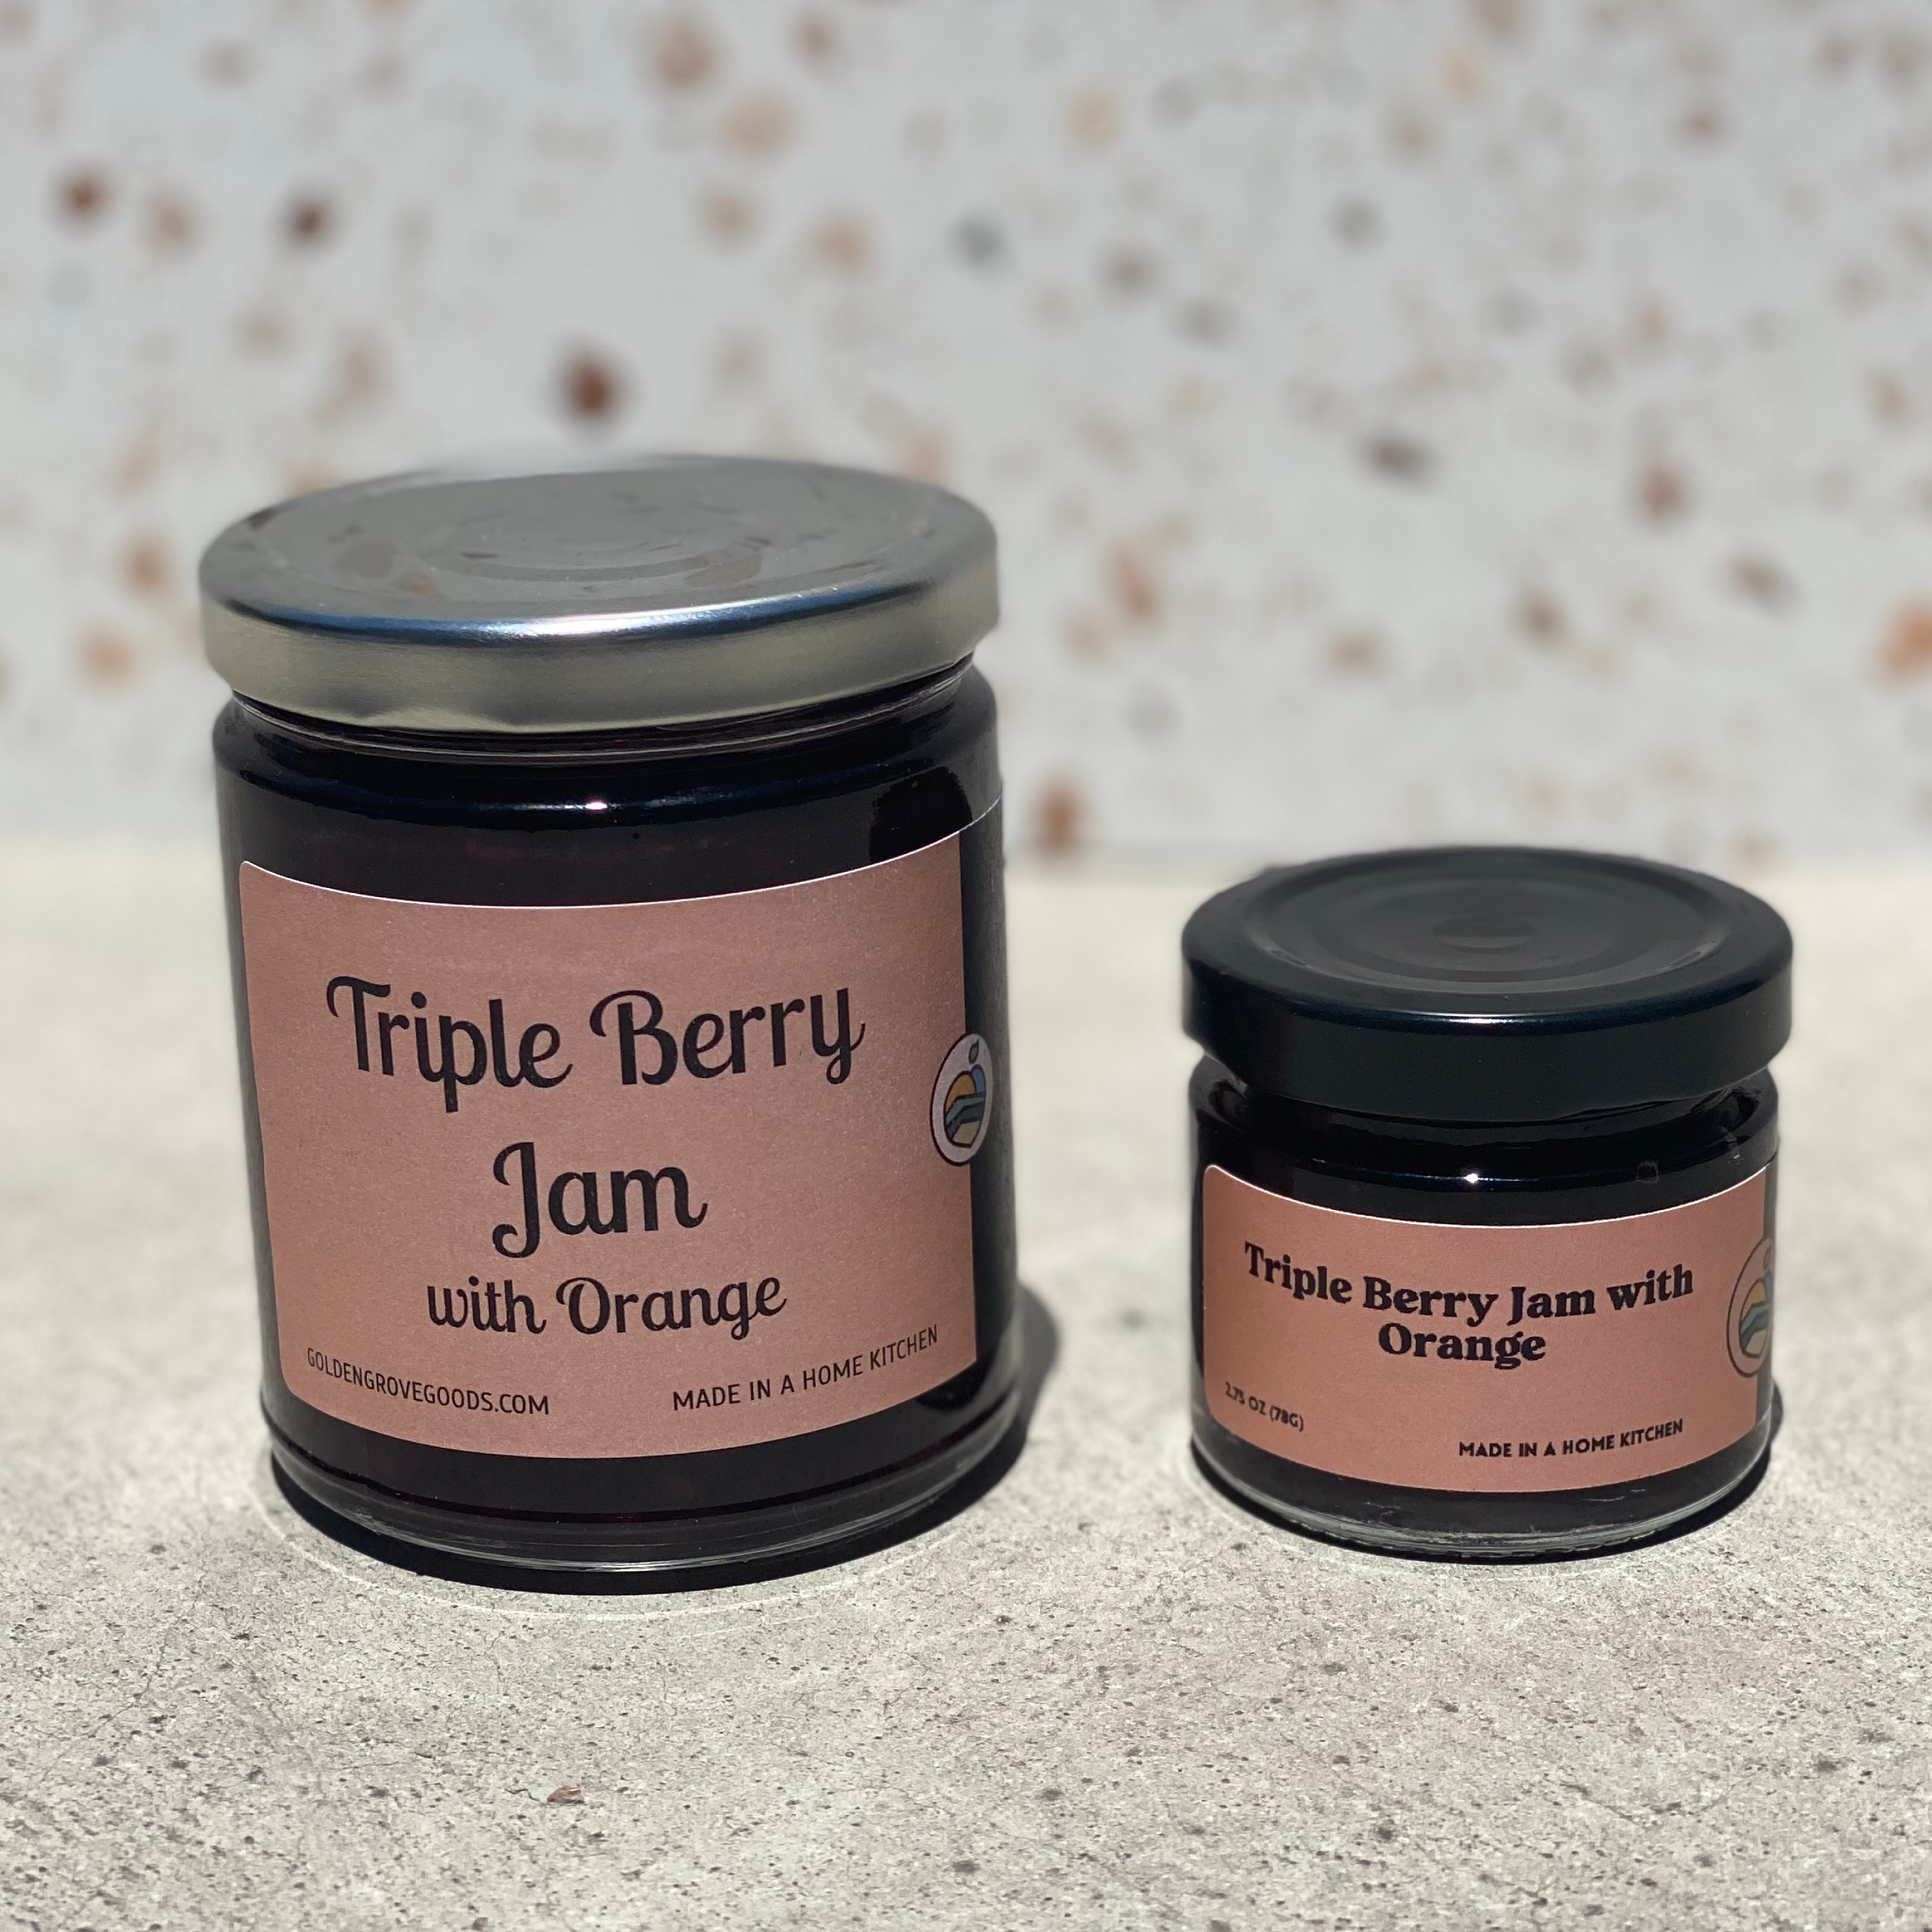 Triple Berry and Orange jam